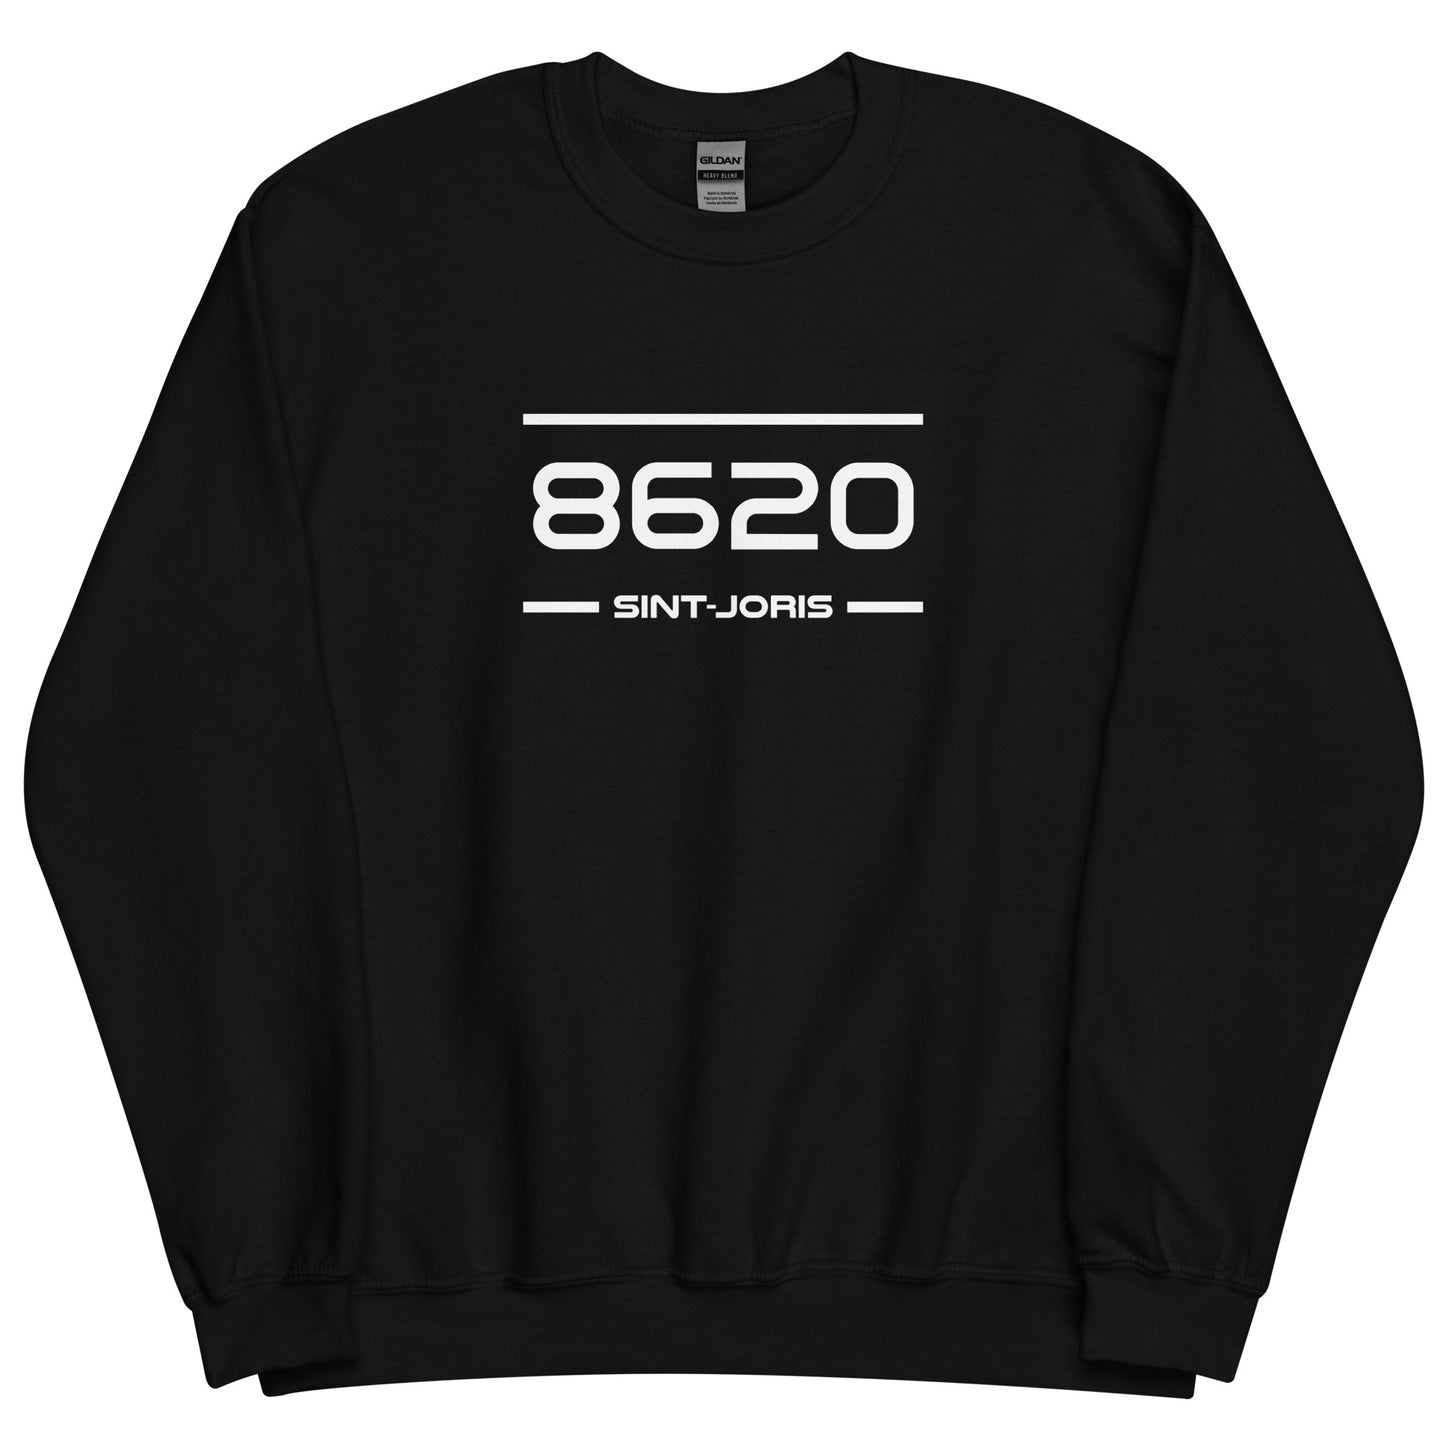 Sweater - 8620 - Sint-Joris (M/V)